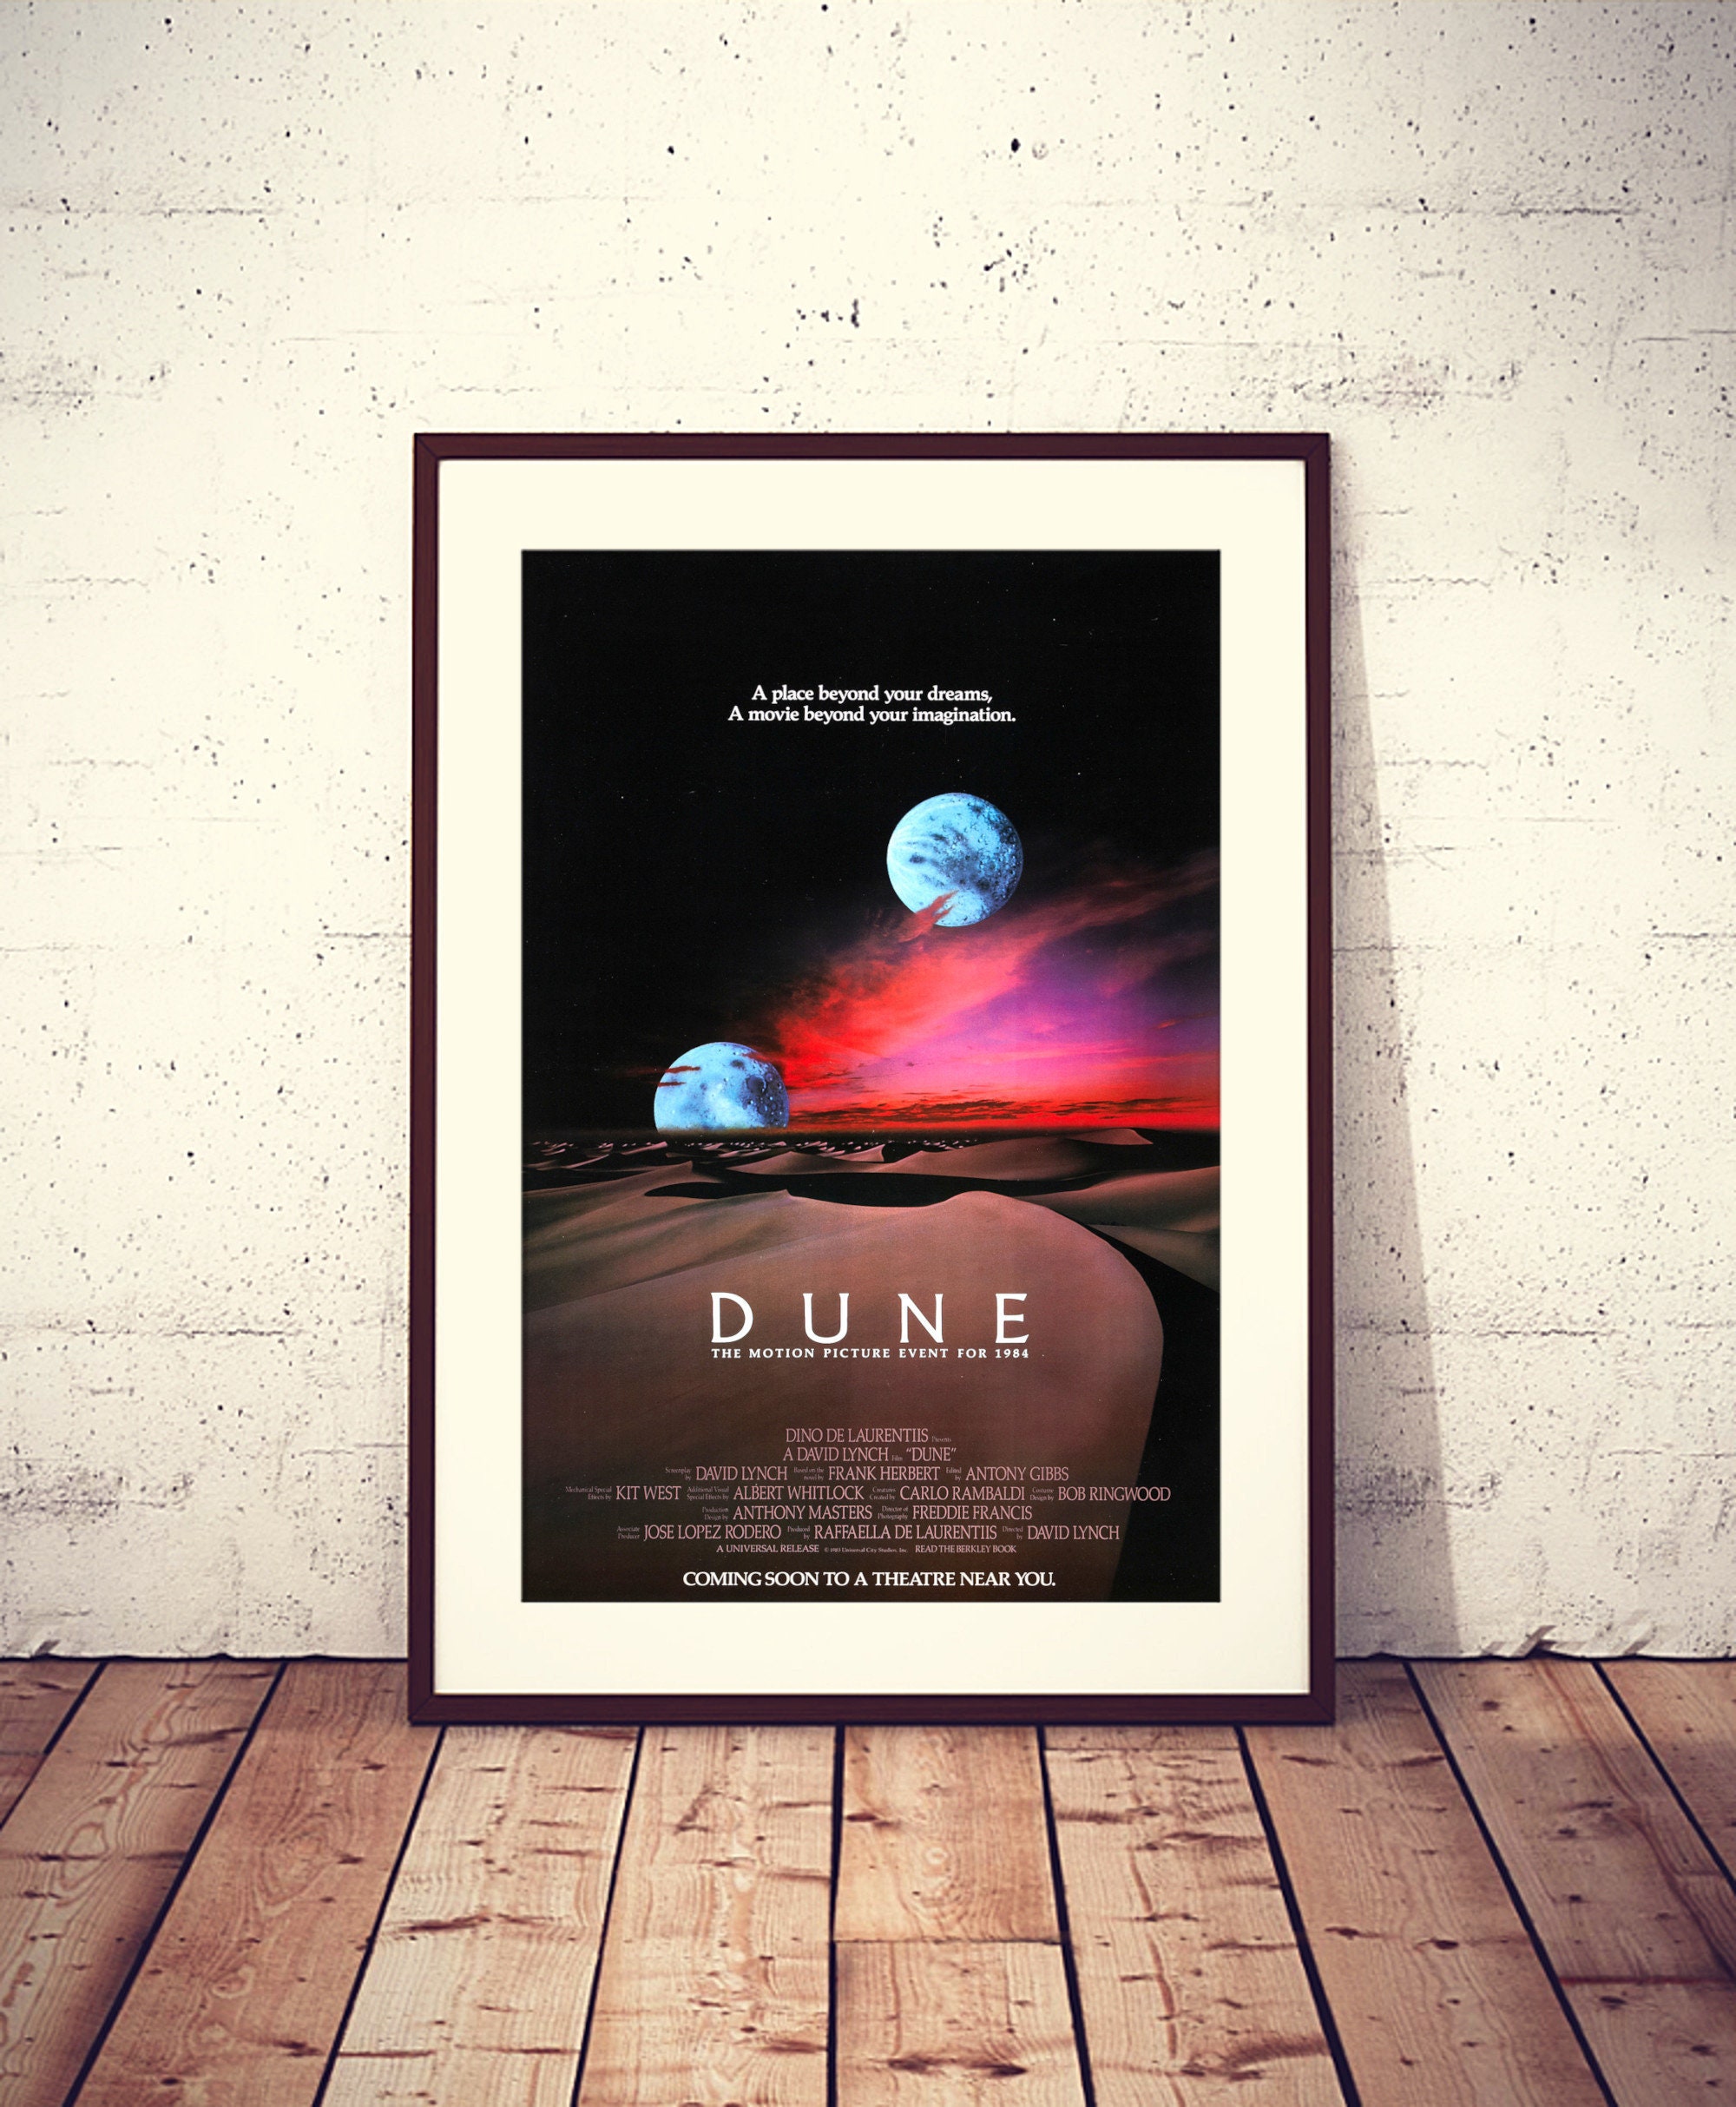 Dune 1984 American Epic Science Fiction Film Original Poster pic